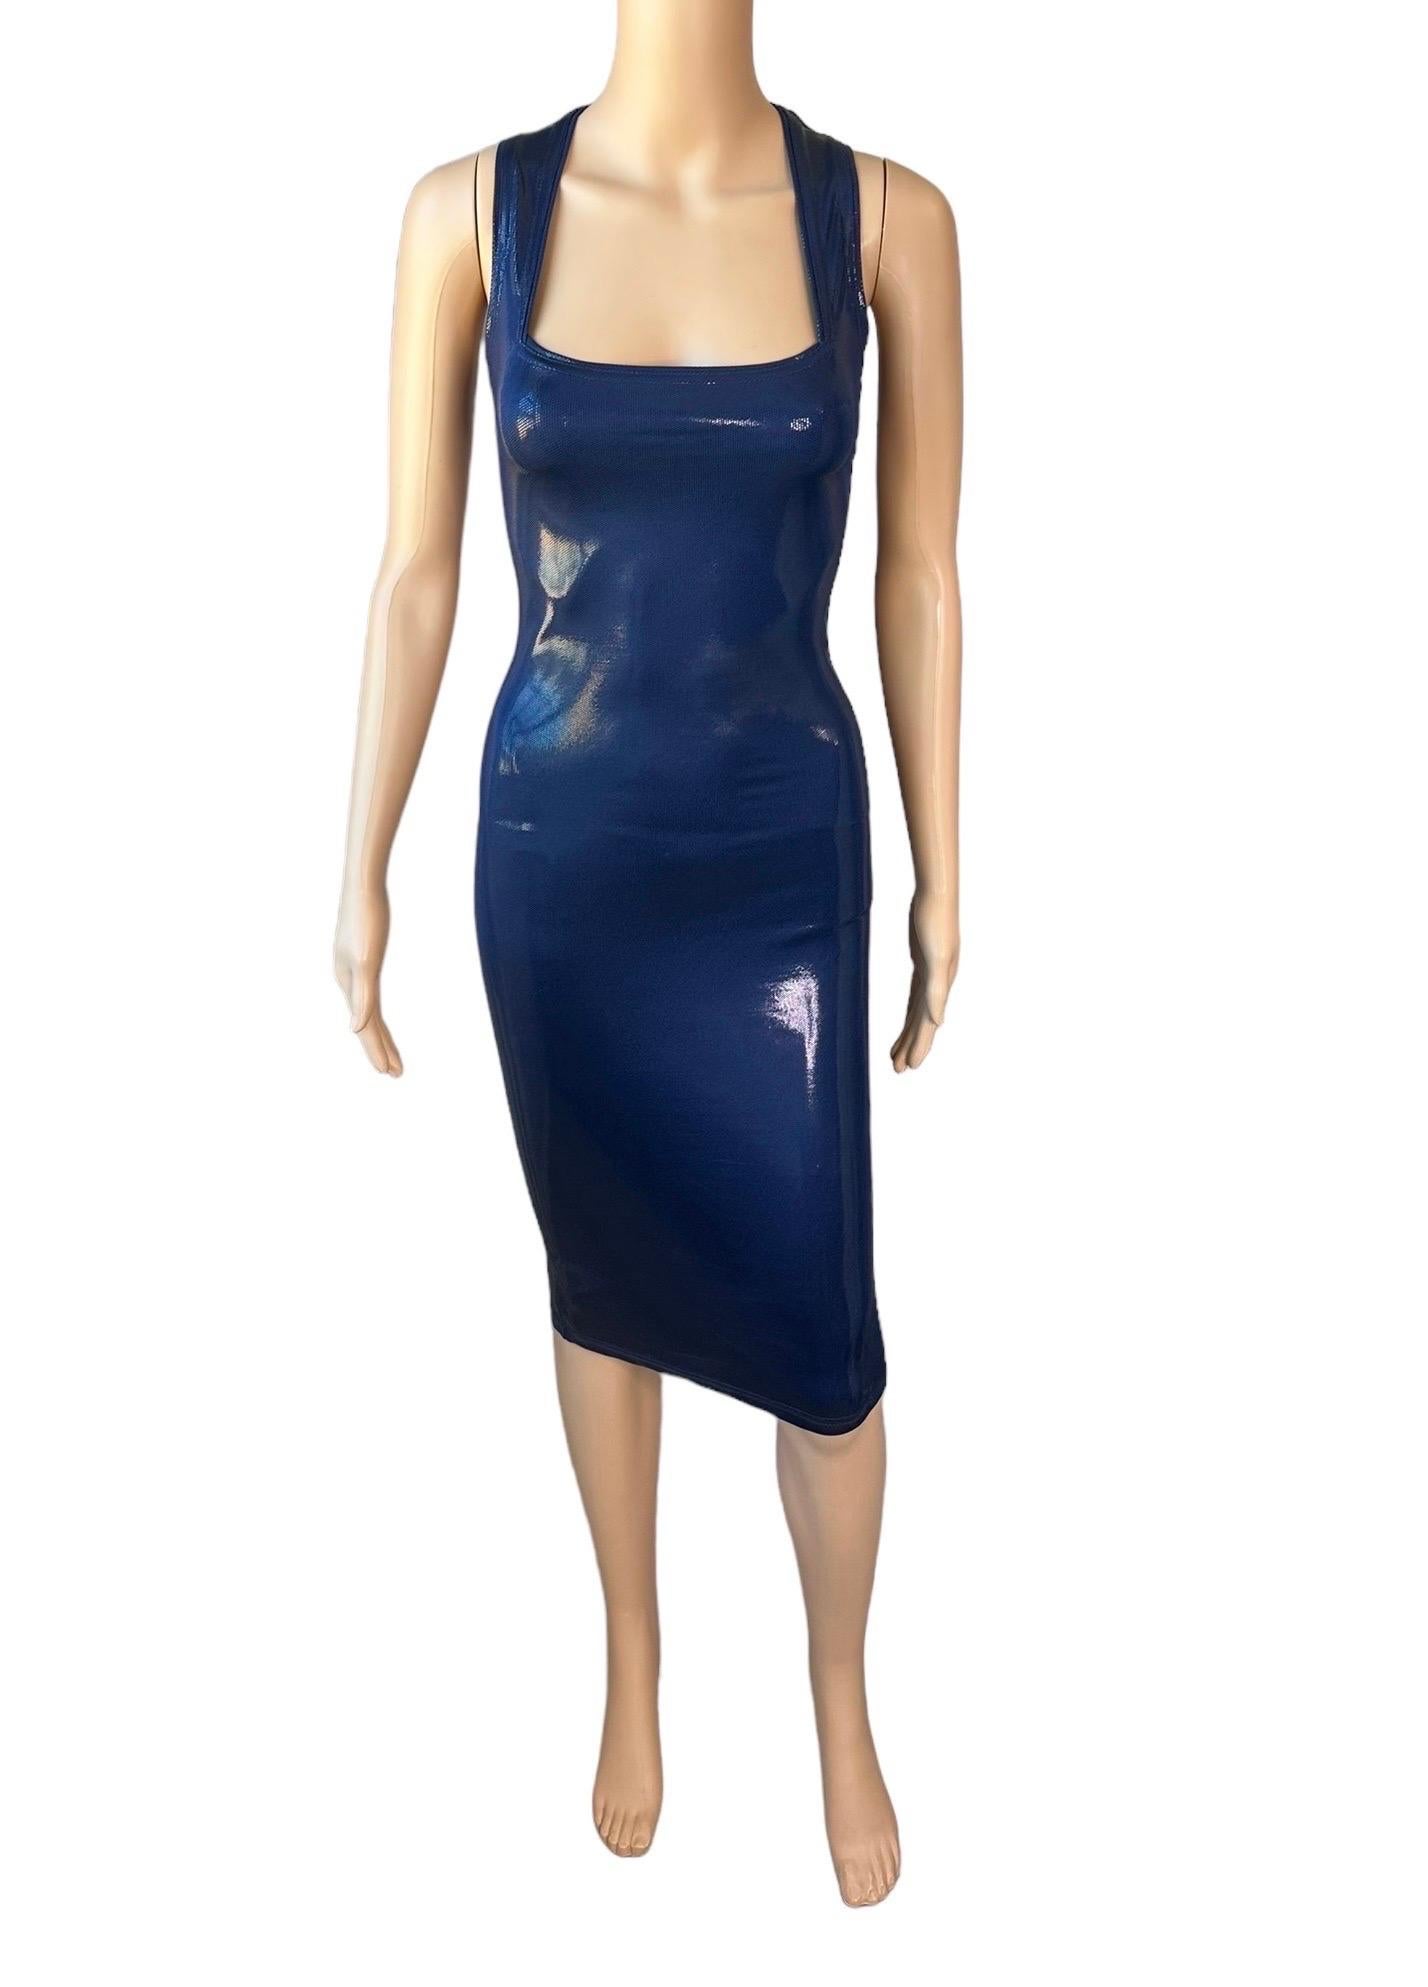 Gianni Versace c. 1994 Vintage Wet Look Stretch Bodycon Navy Blue Midi Dress 3